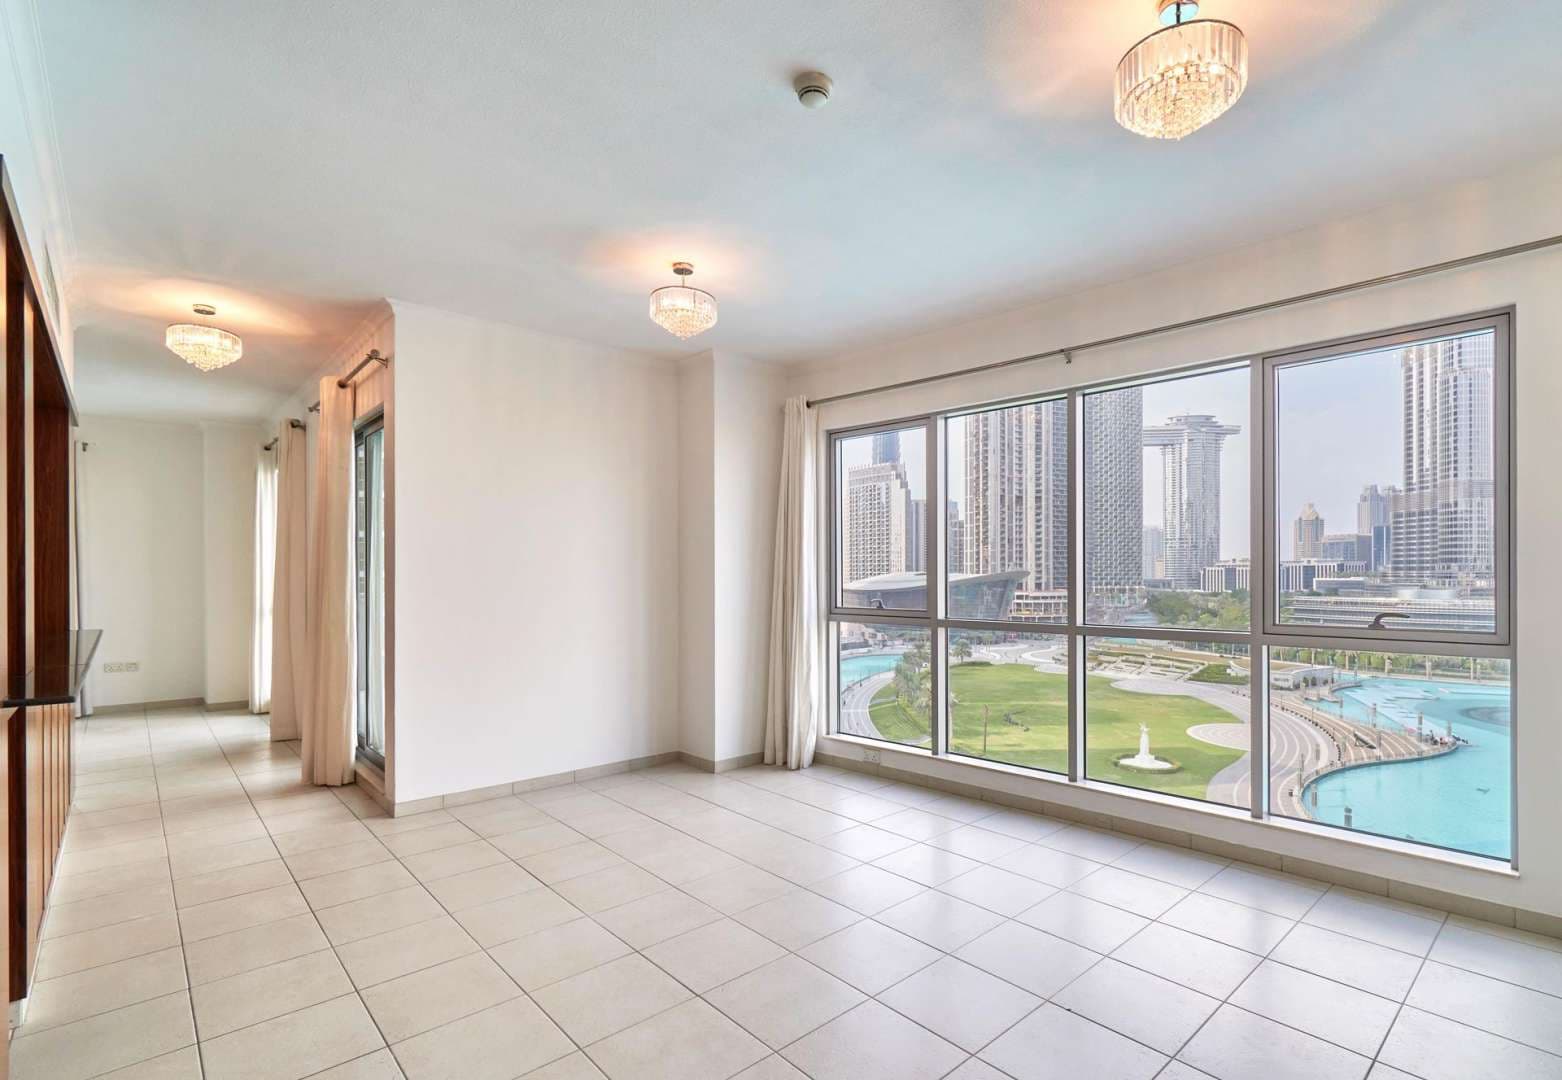 3 Bedroom Apartment For Rent The Residences Downtown Dubai Lp05274 11772918e05e9a00.jpg